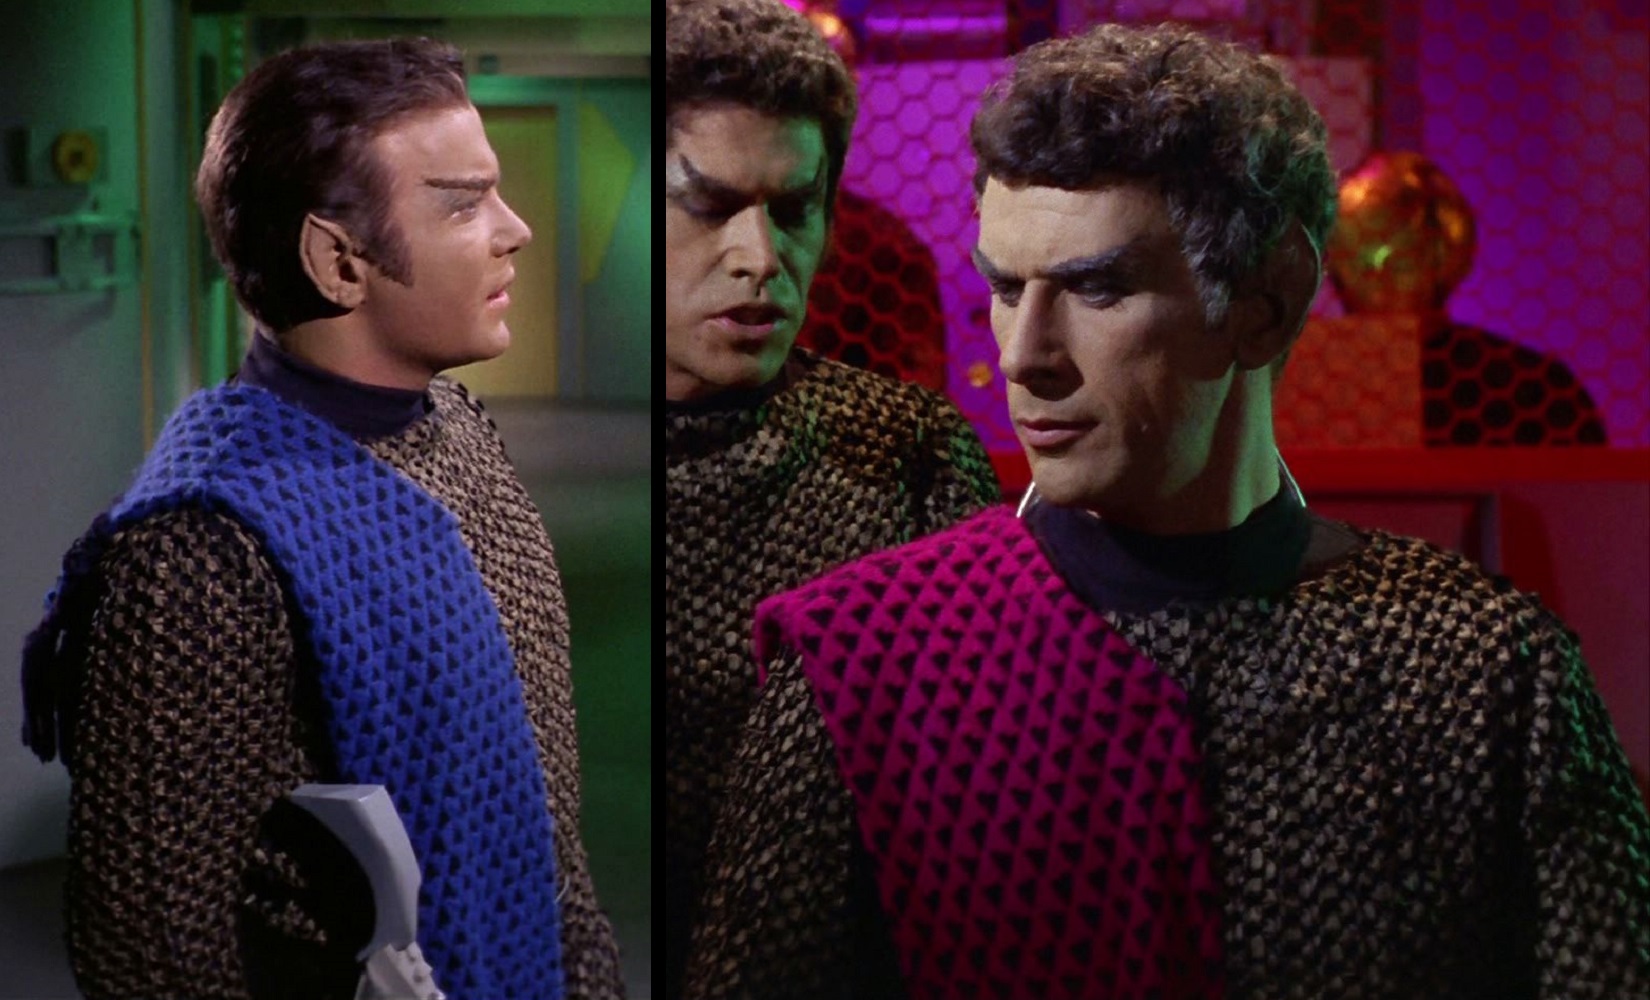 Star Trek TOS costumes - Romulans